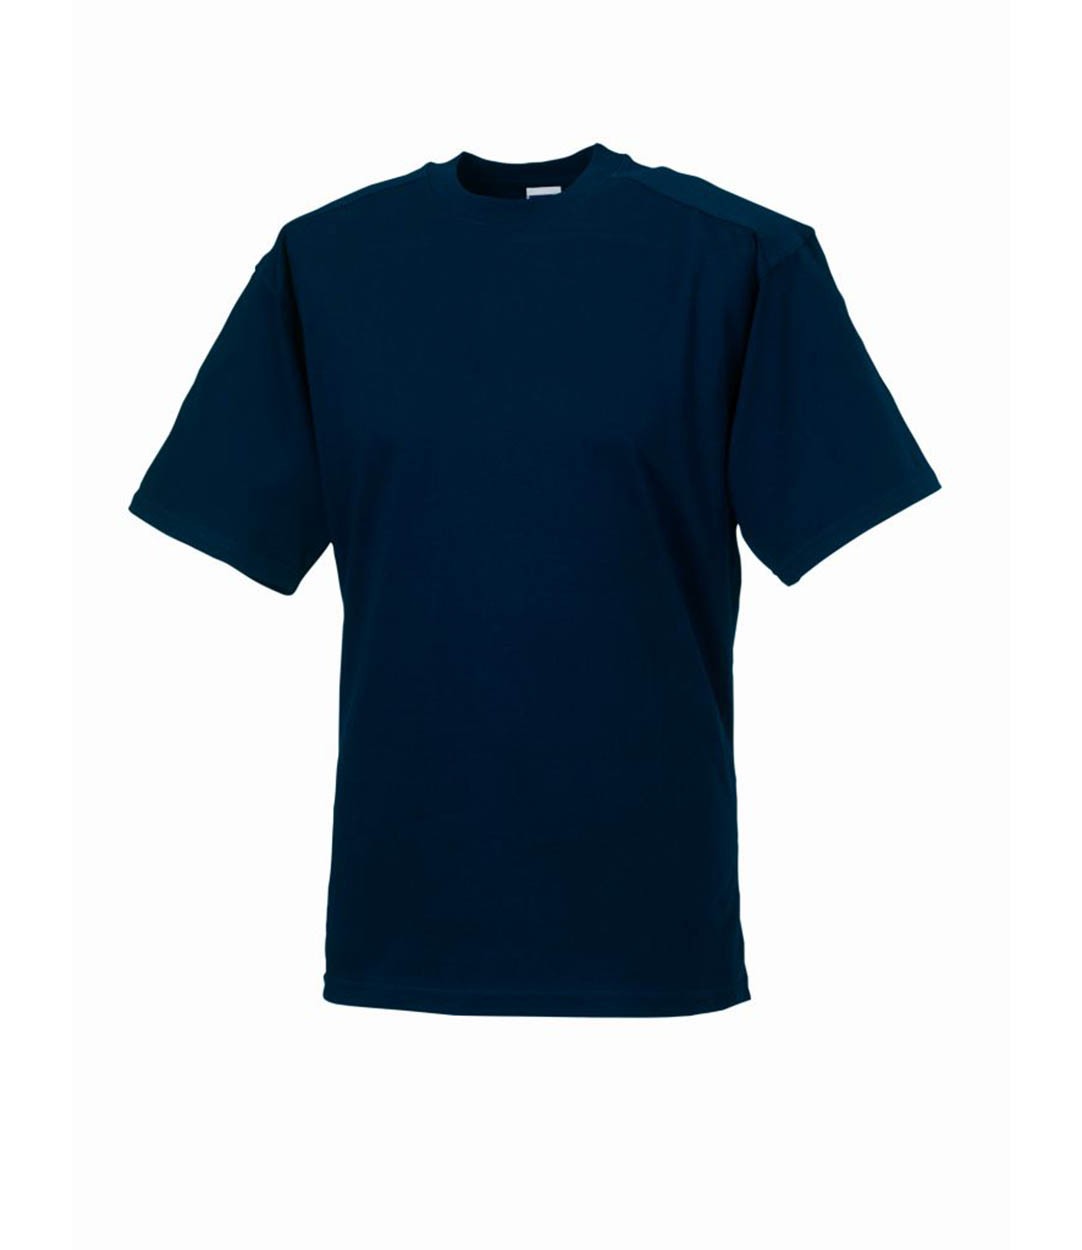 Russell 010M Workwear T-Shirt - Heavyweight T Shirts Unisex / Men's Shirts - T Shirts - Leisurewear - Best Workwear